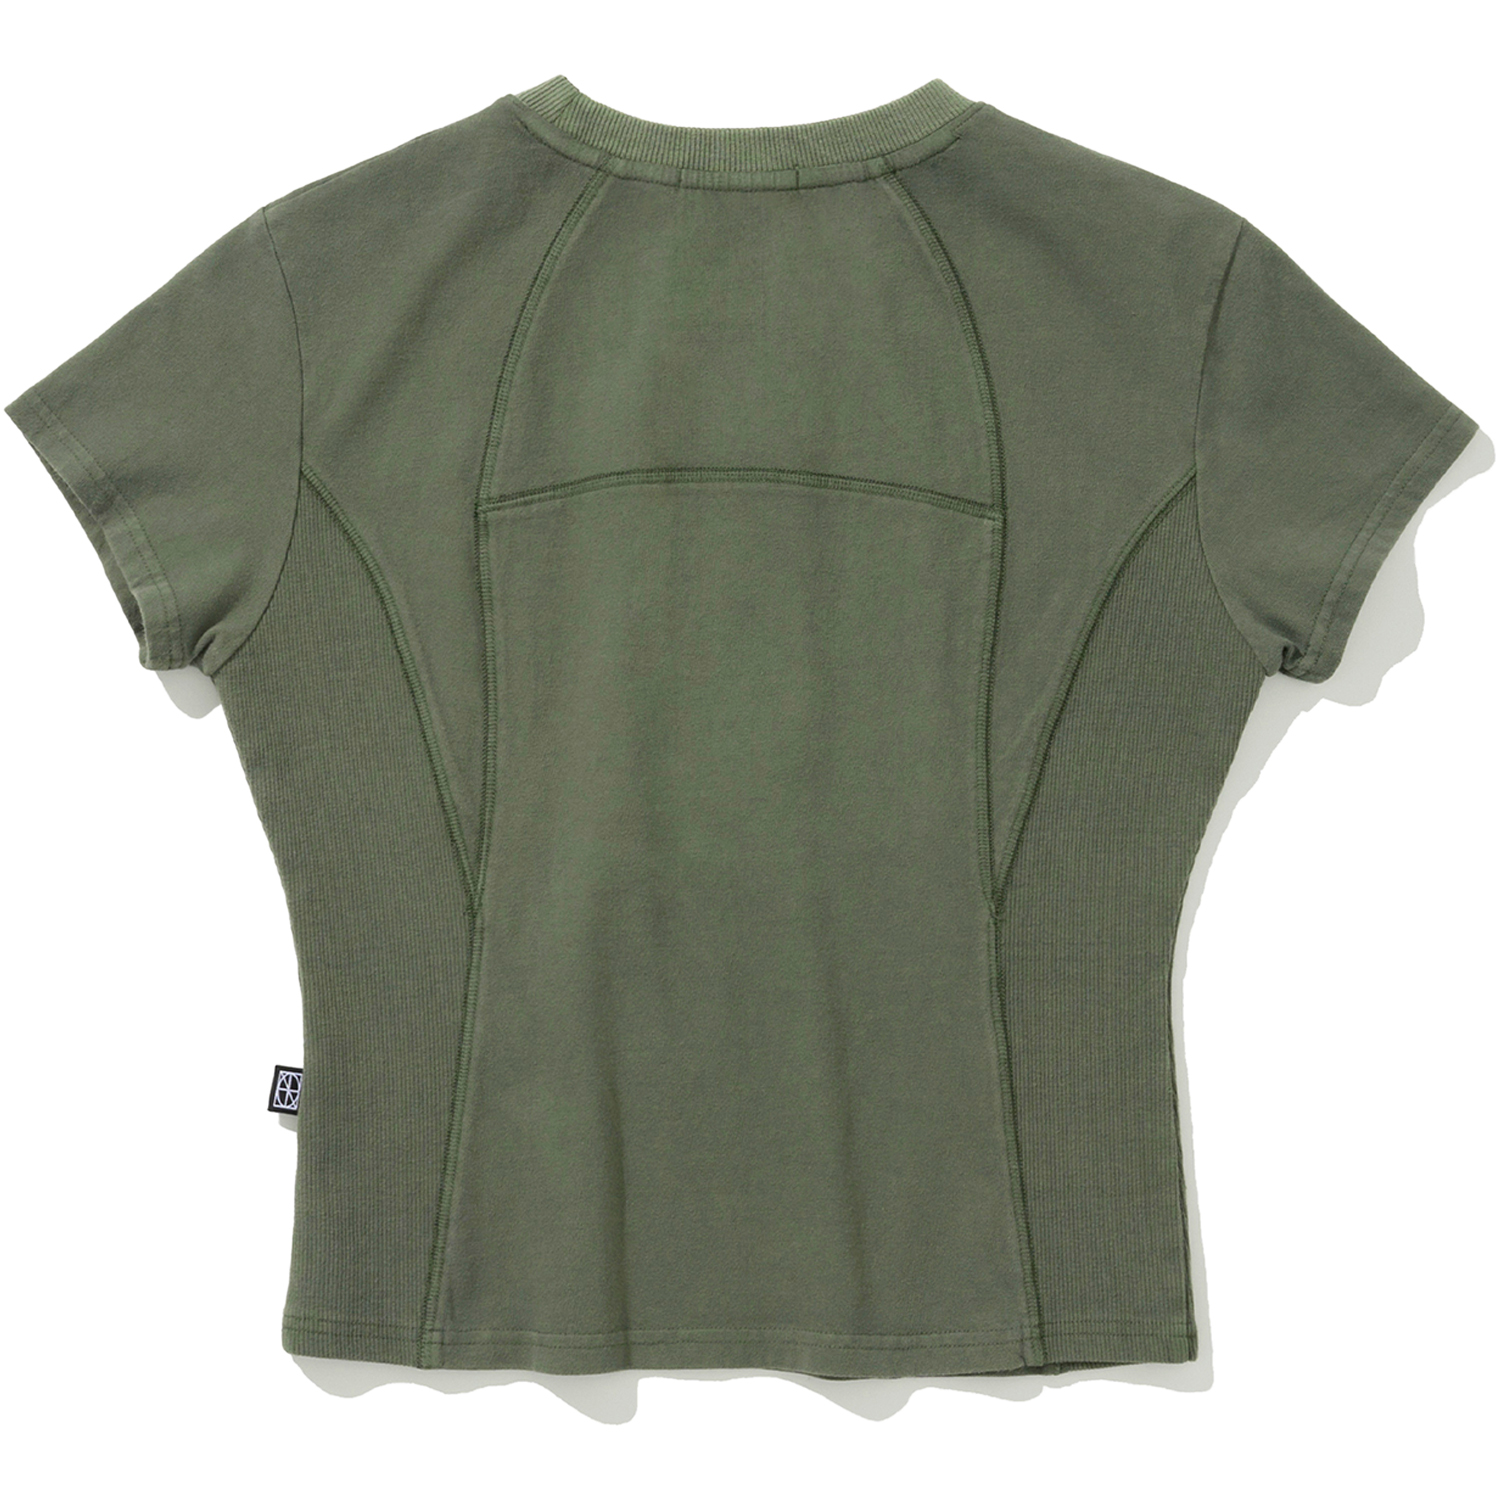 W N4ND Incision Pigment T-Shirts - Khaki,NOT4NERD